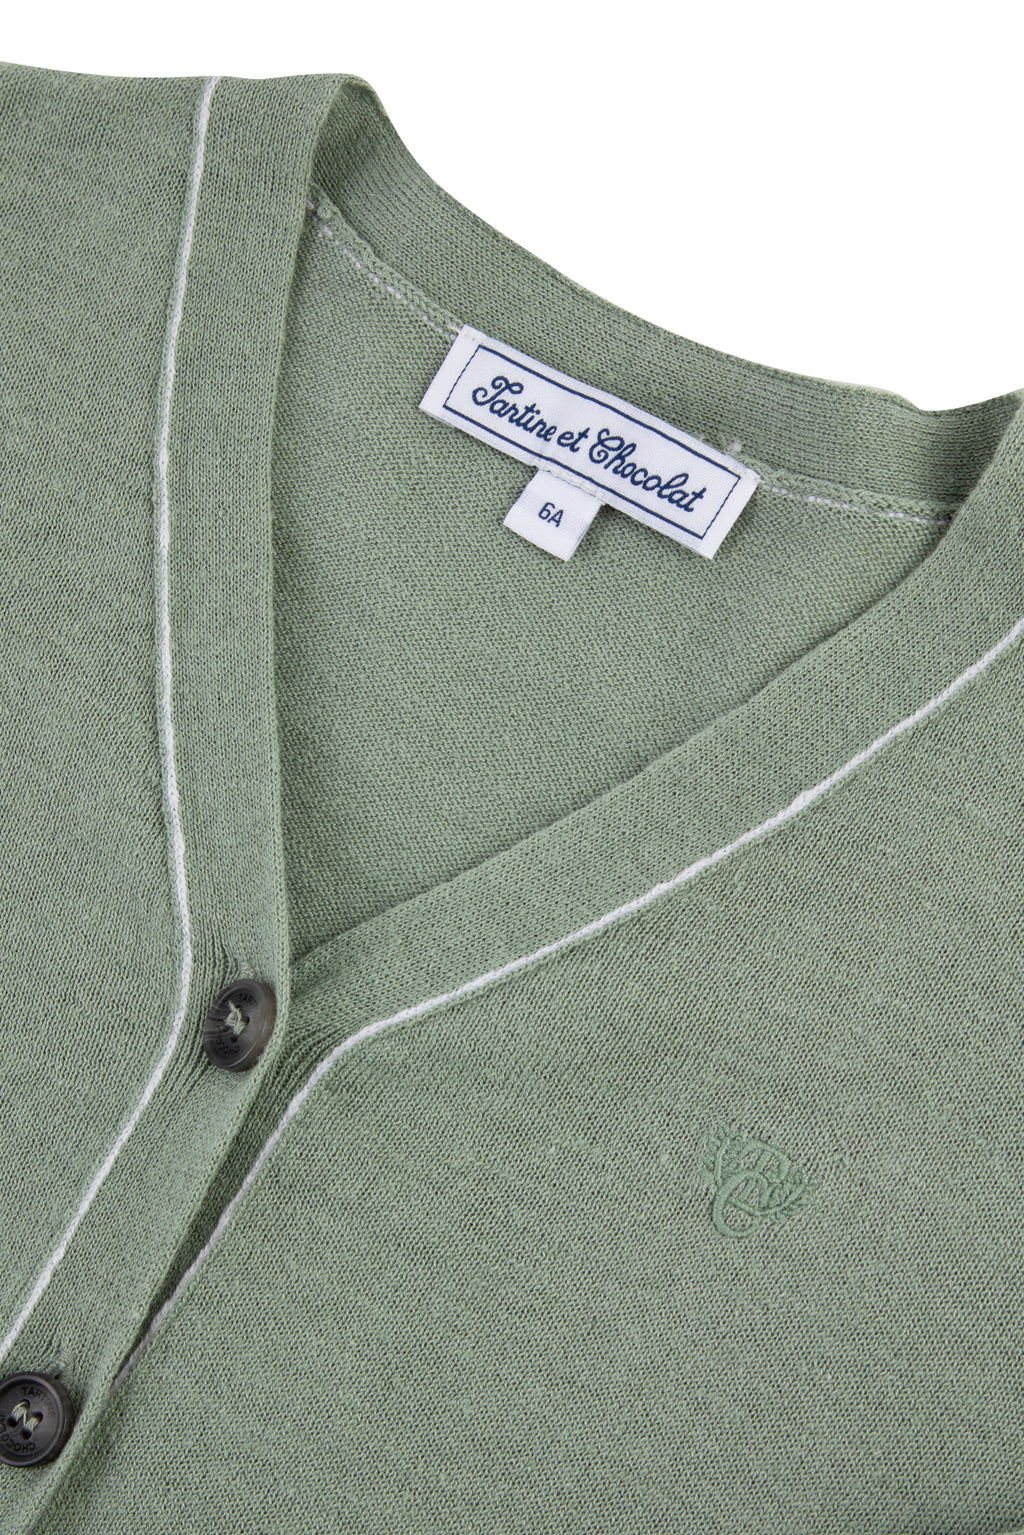 Cardigan - Green Linen